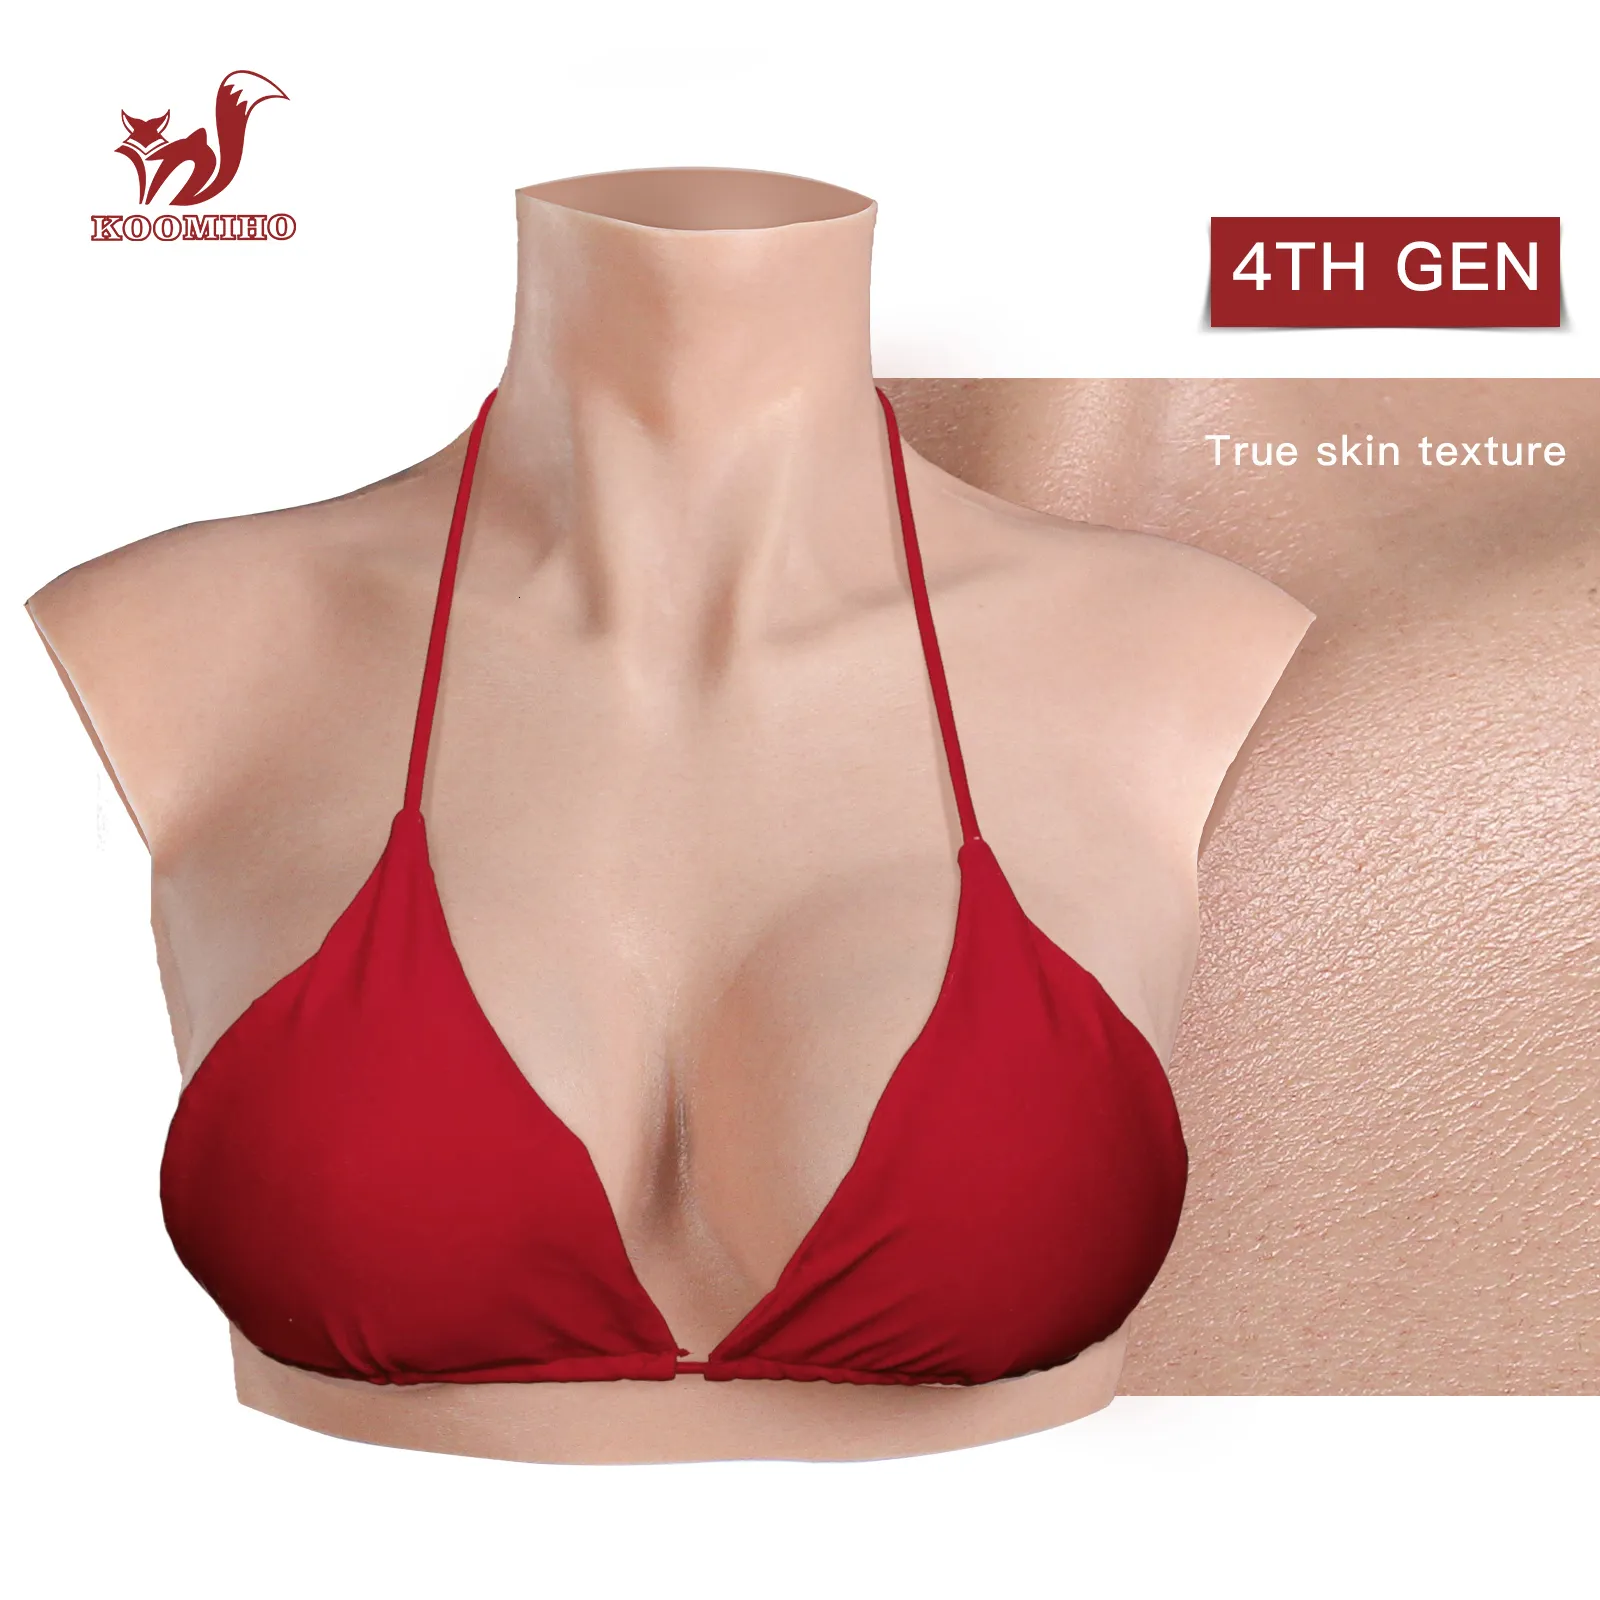 Breast Form KOOMIHO 4TH GEN Realistic Silicone Breast Forms